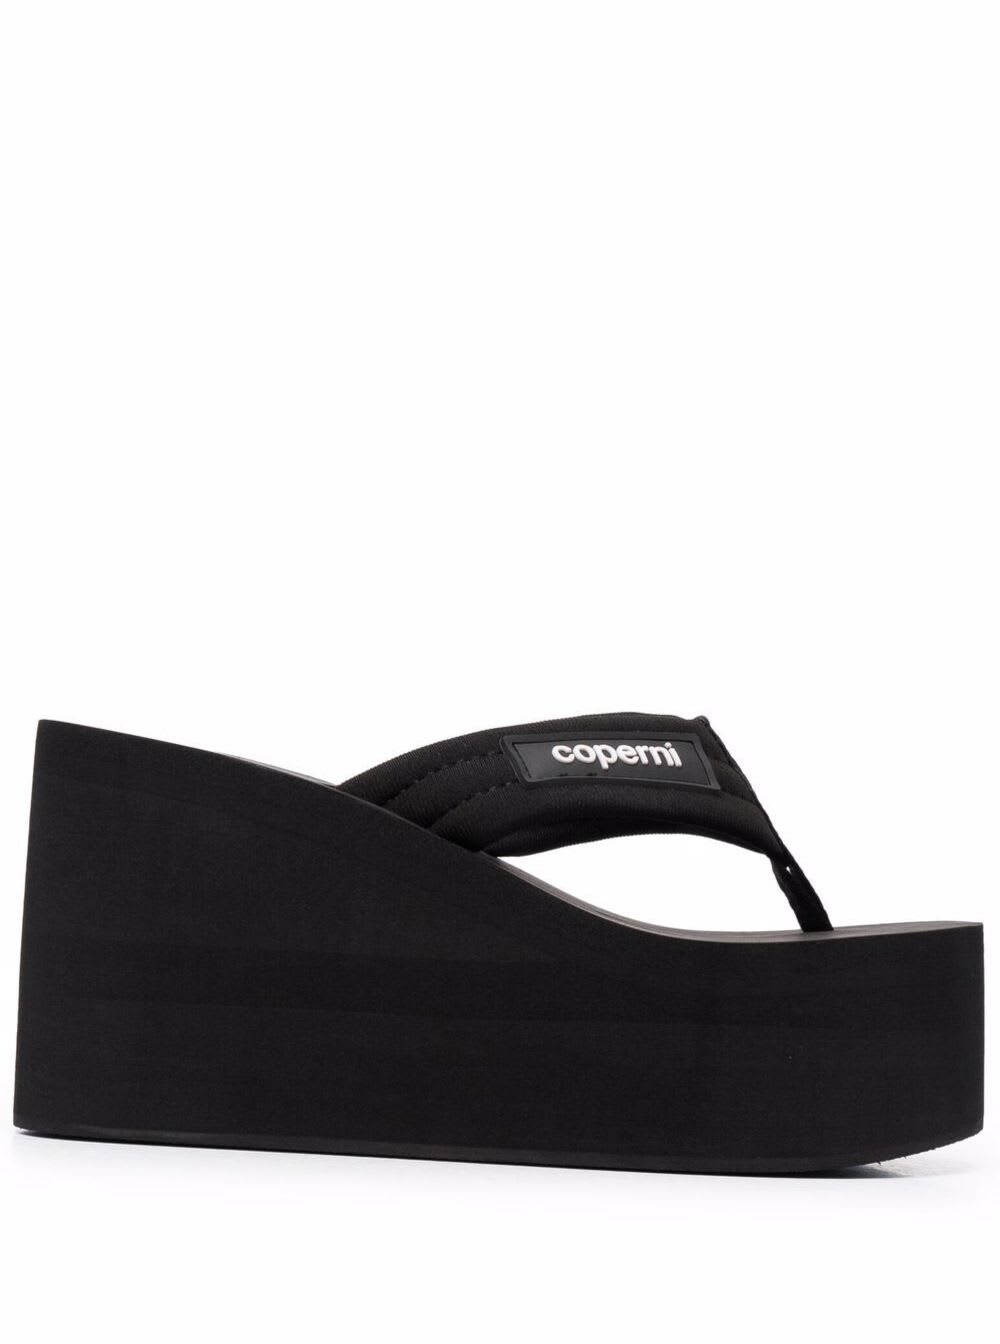 Shop Coperni Black Platform Wedge Strap Sandals In Polyurethane Woman